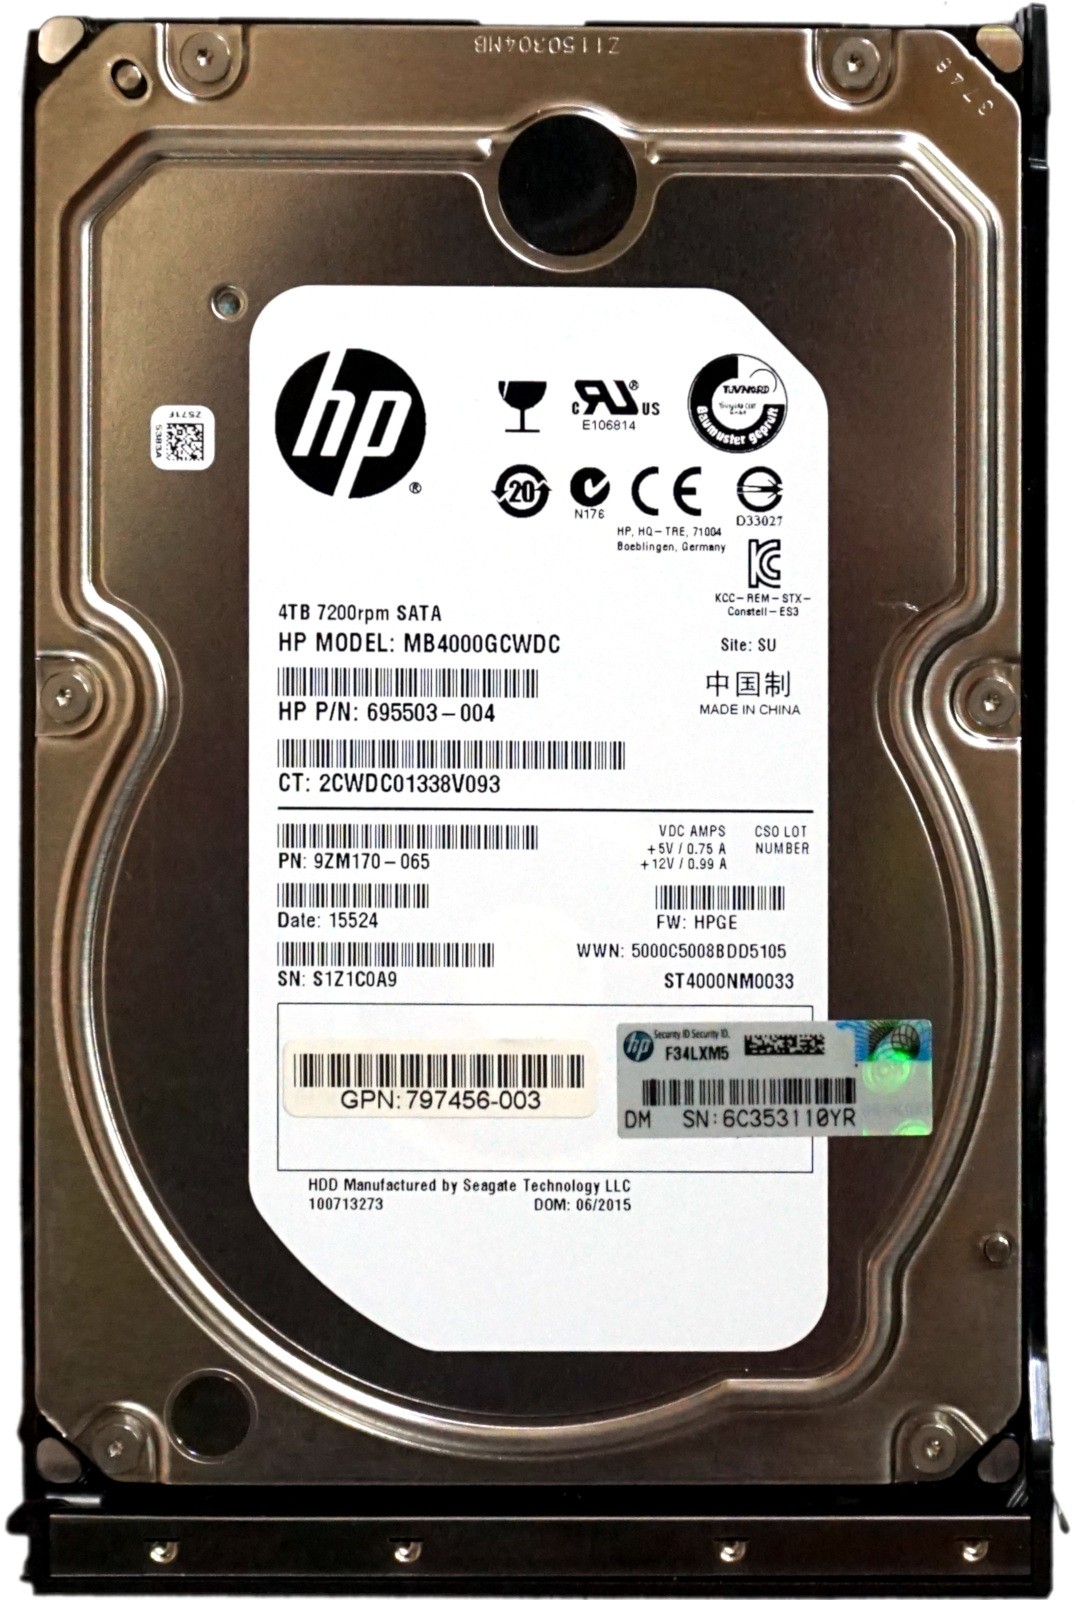 HP (695503-004) 4TB Midline SATA III (3.5") 6Gbps 7.2K HDD in Gen9 Caddy